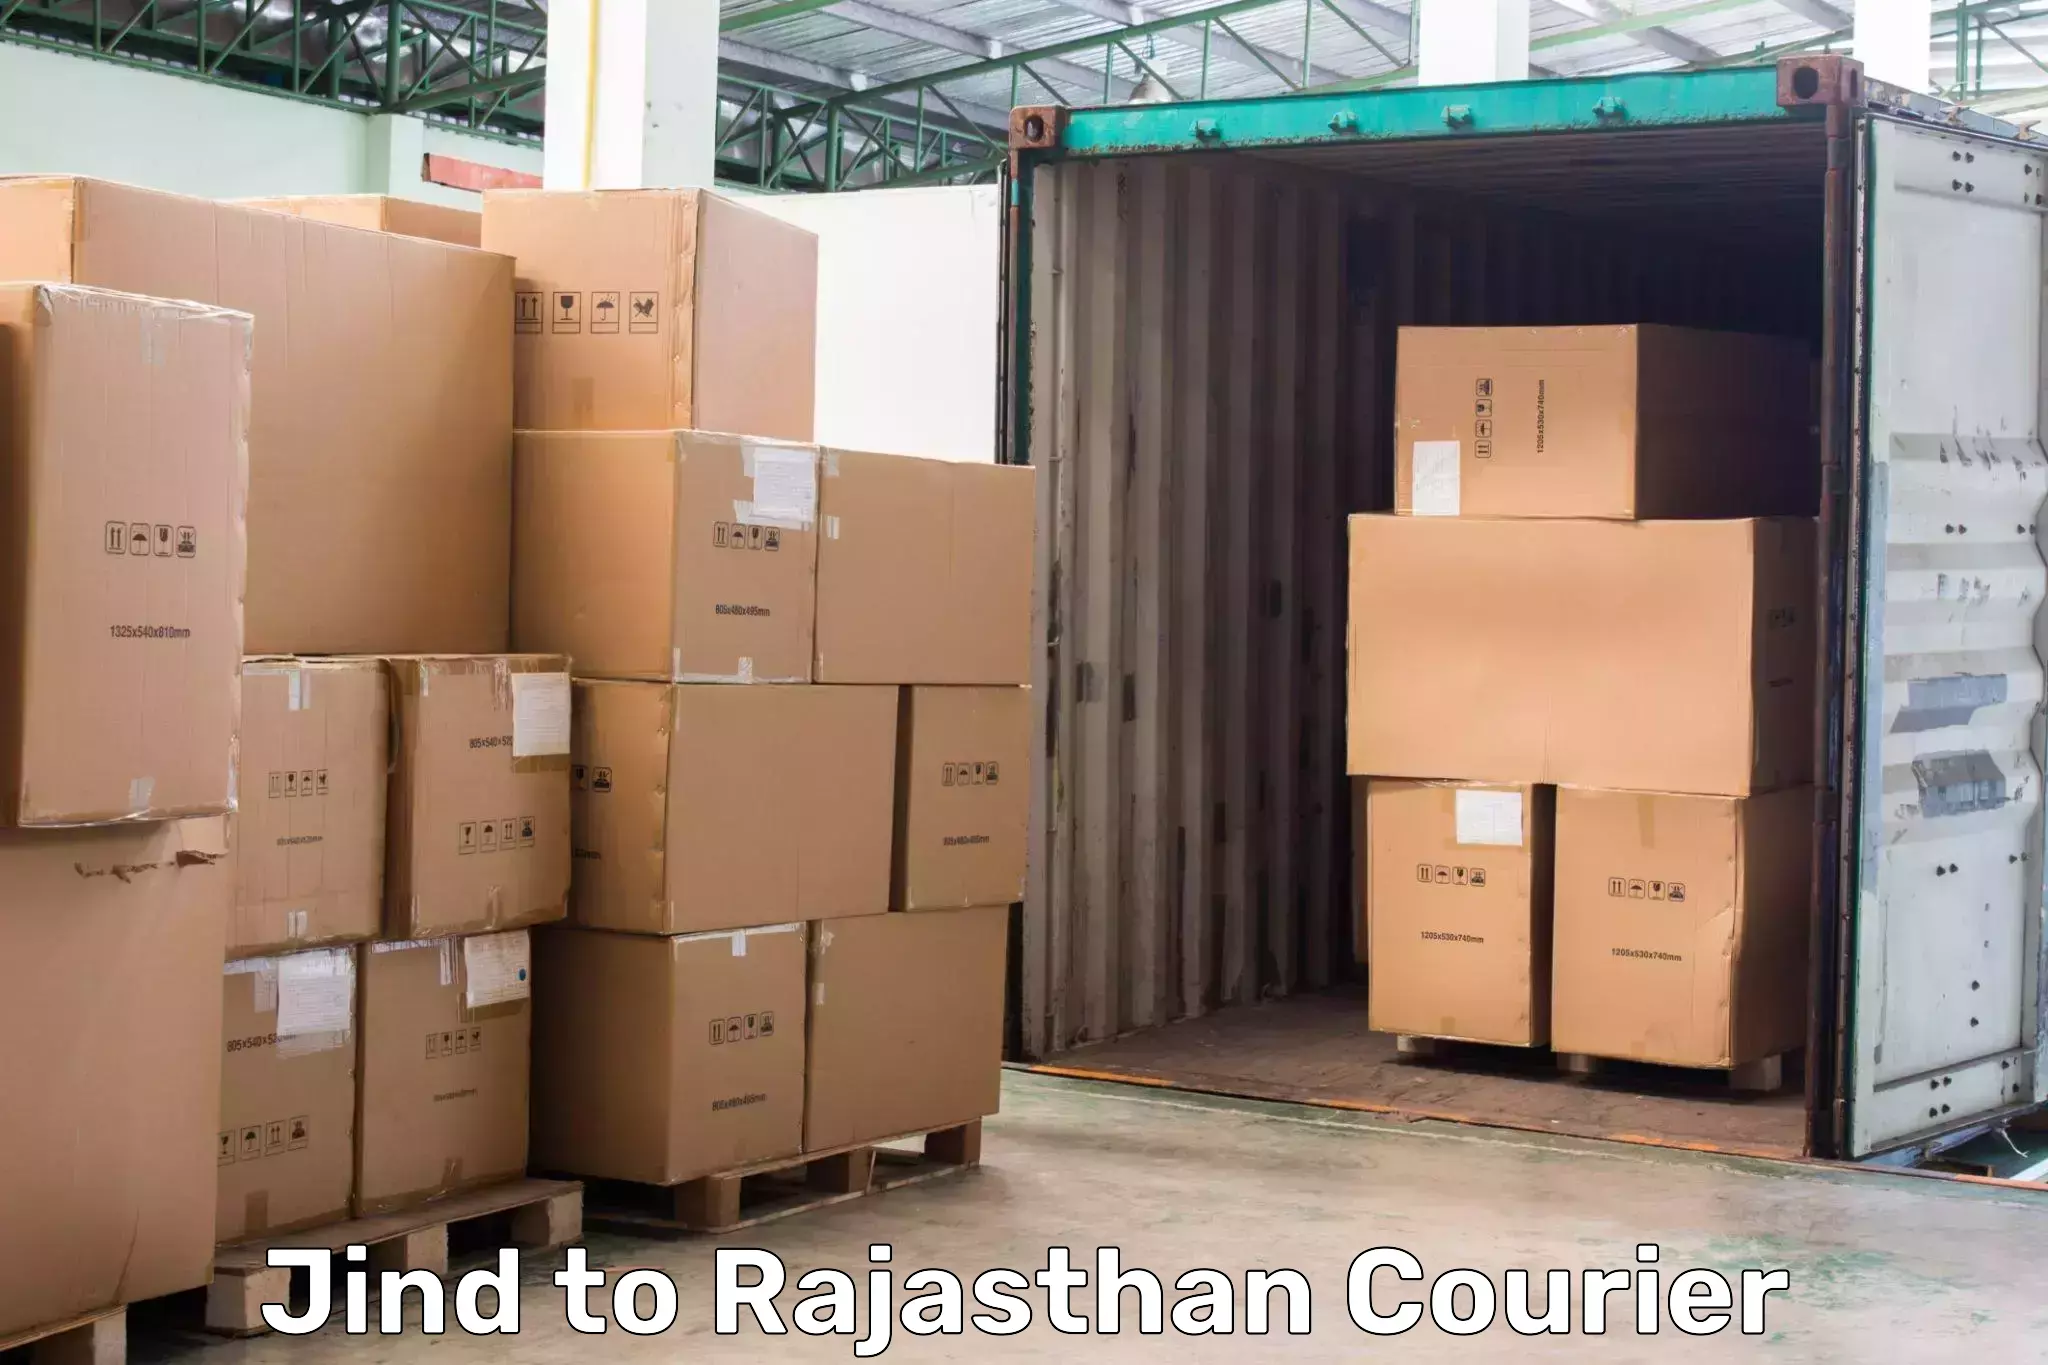 International parcel service Jind to Suratgarh